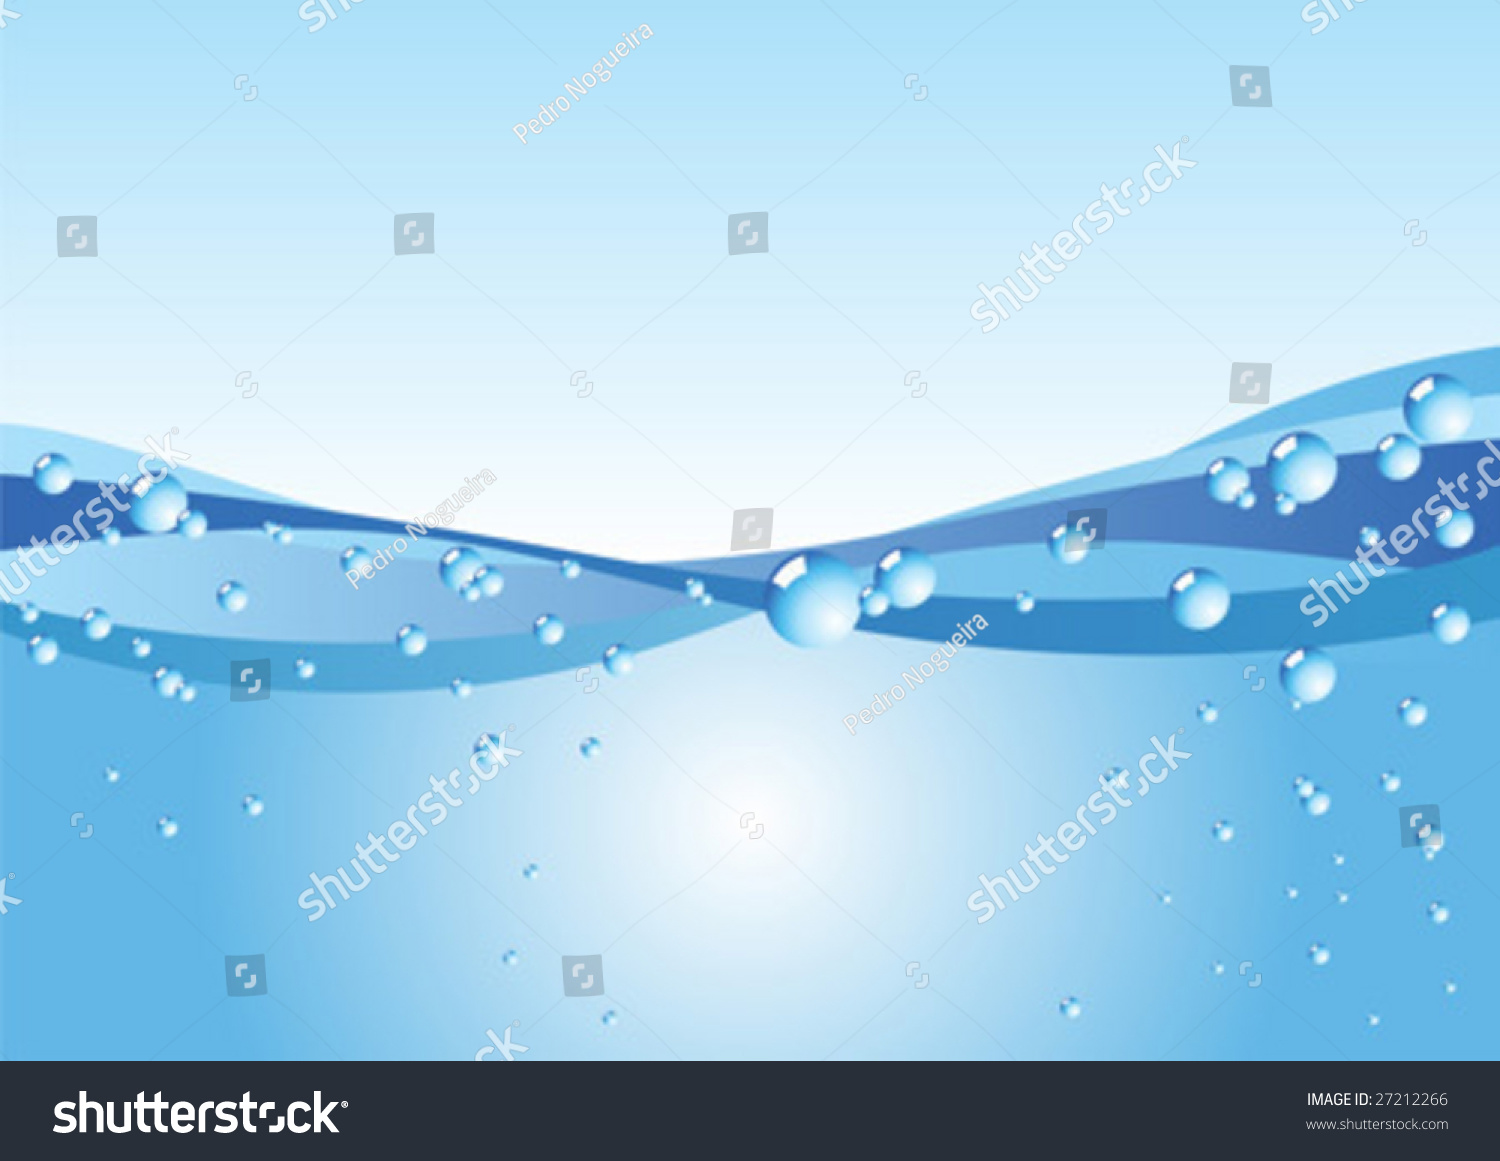 Water Surface Bubbles Blue Tones vector de stock libre de regalías Shutterstock